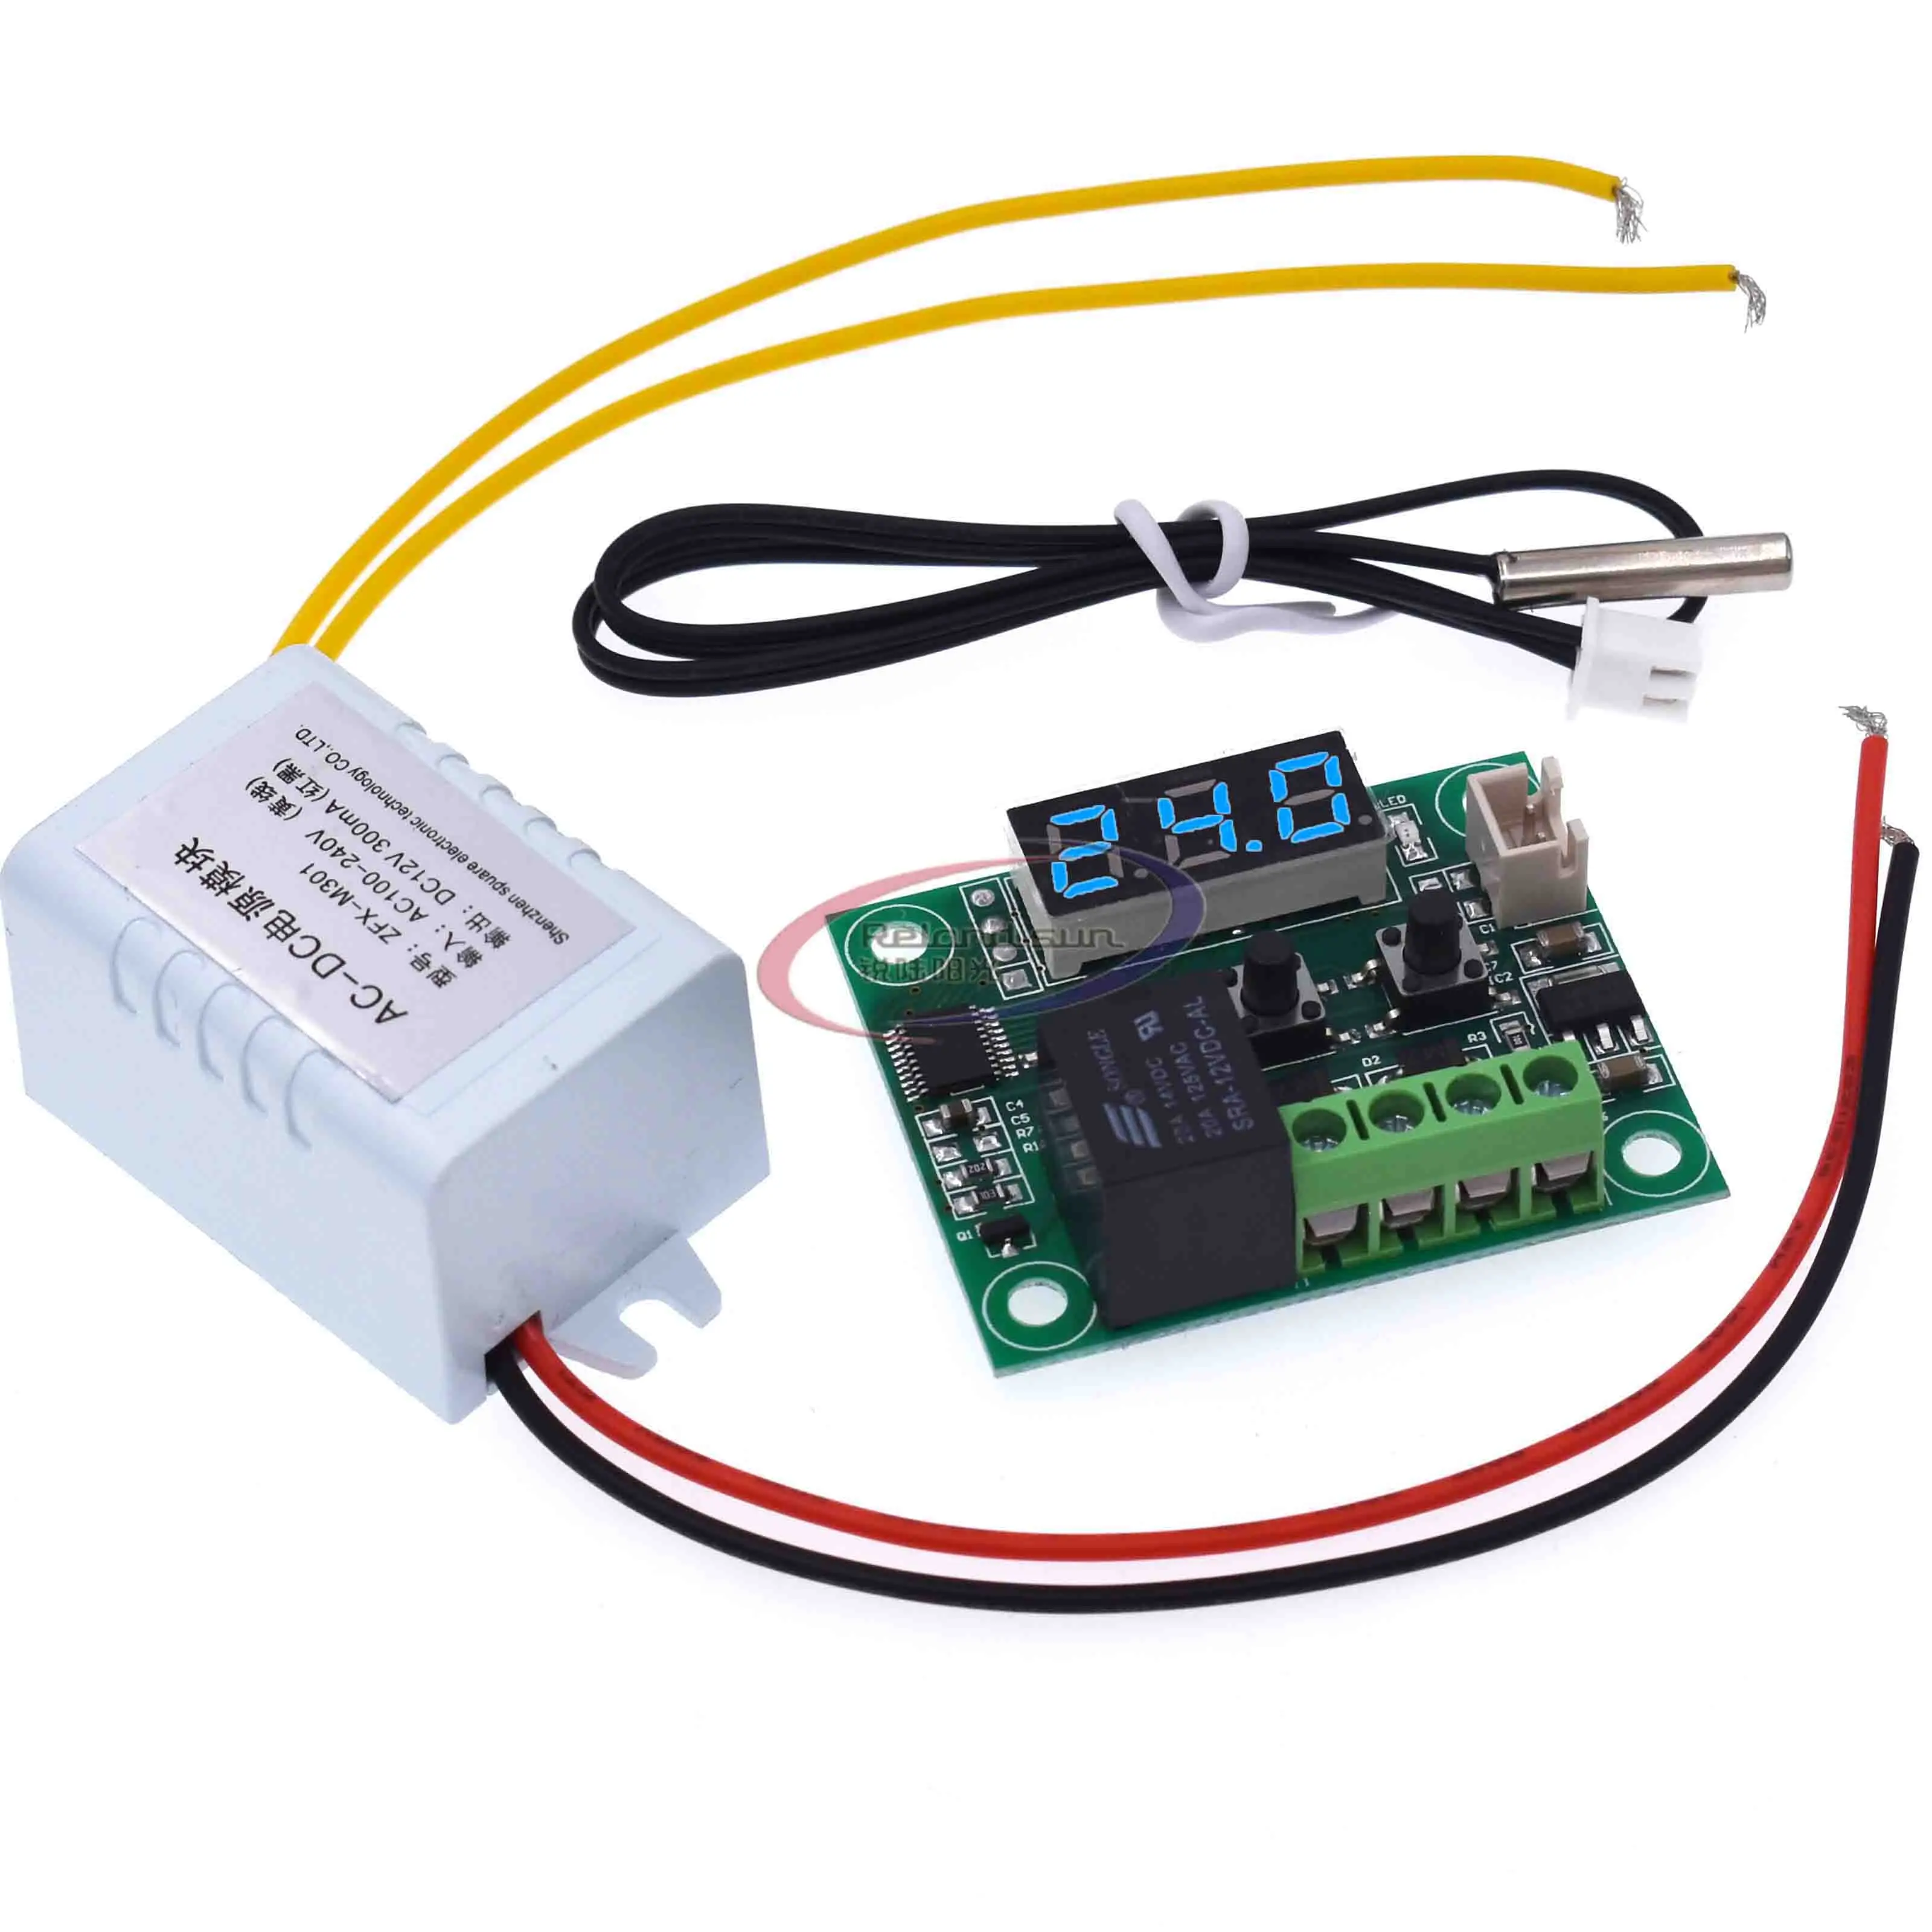 https://ae05.alicdn.com/kf/HTB1B8QEUMHqK1RjSZFgq6y7JXXaR/W1209WK-W1209-DC-12V-AC-110V-220V-Digital-Thermostat-Temperature-Controller-Regulator-Thermoregulator-Incubator-Sensor-Meter.jpg